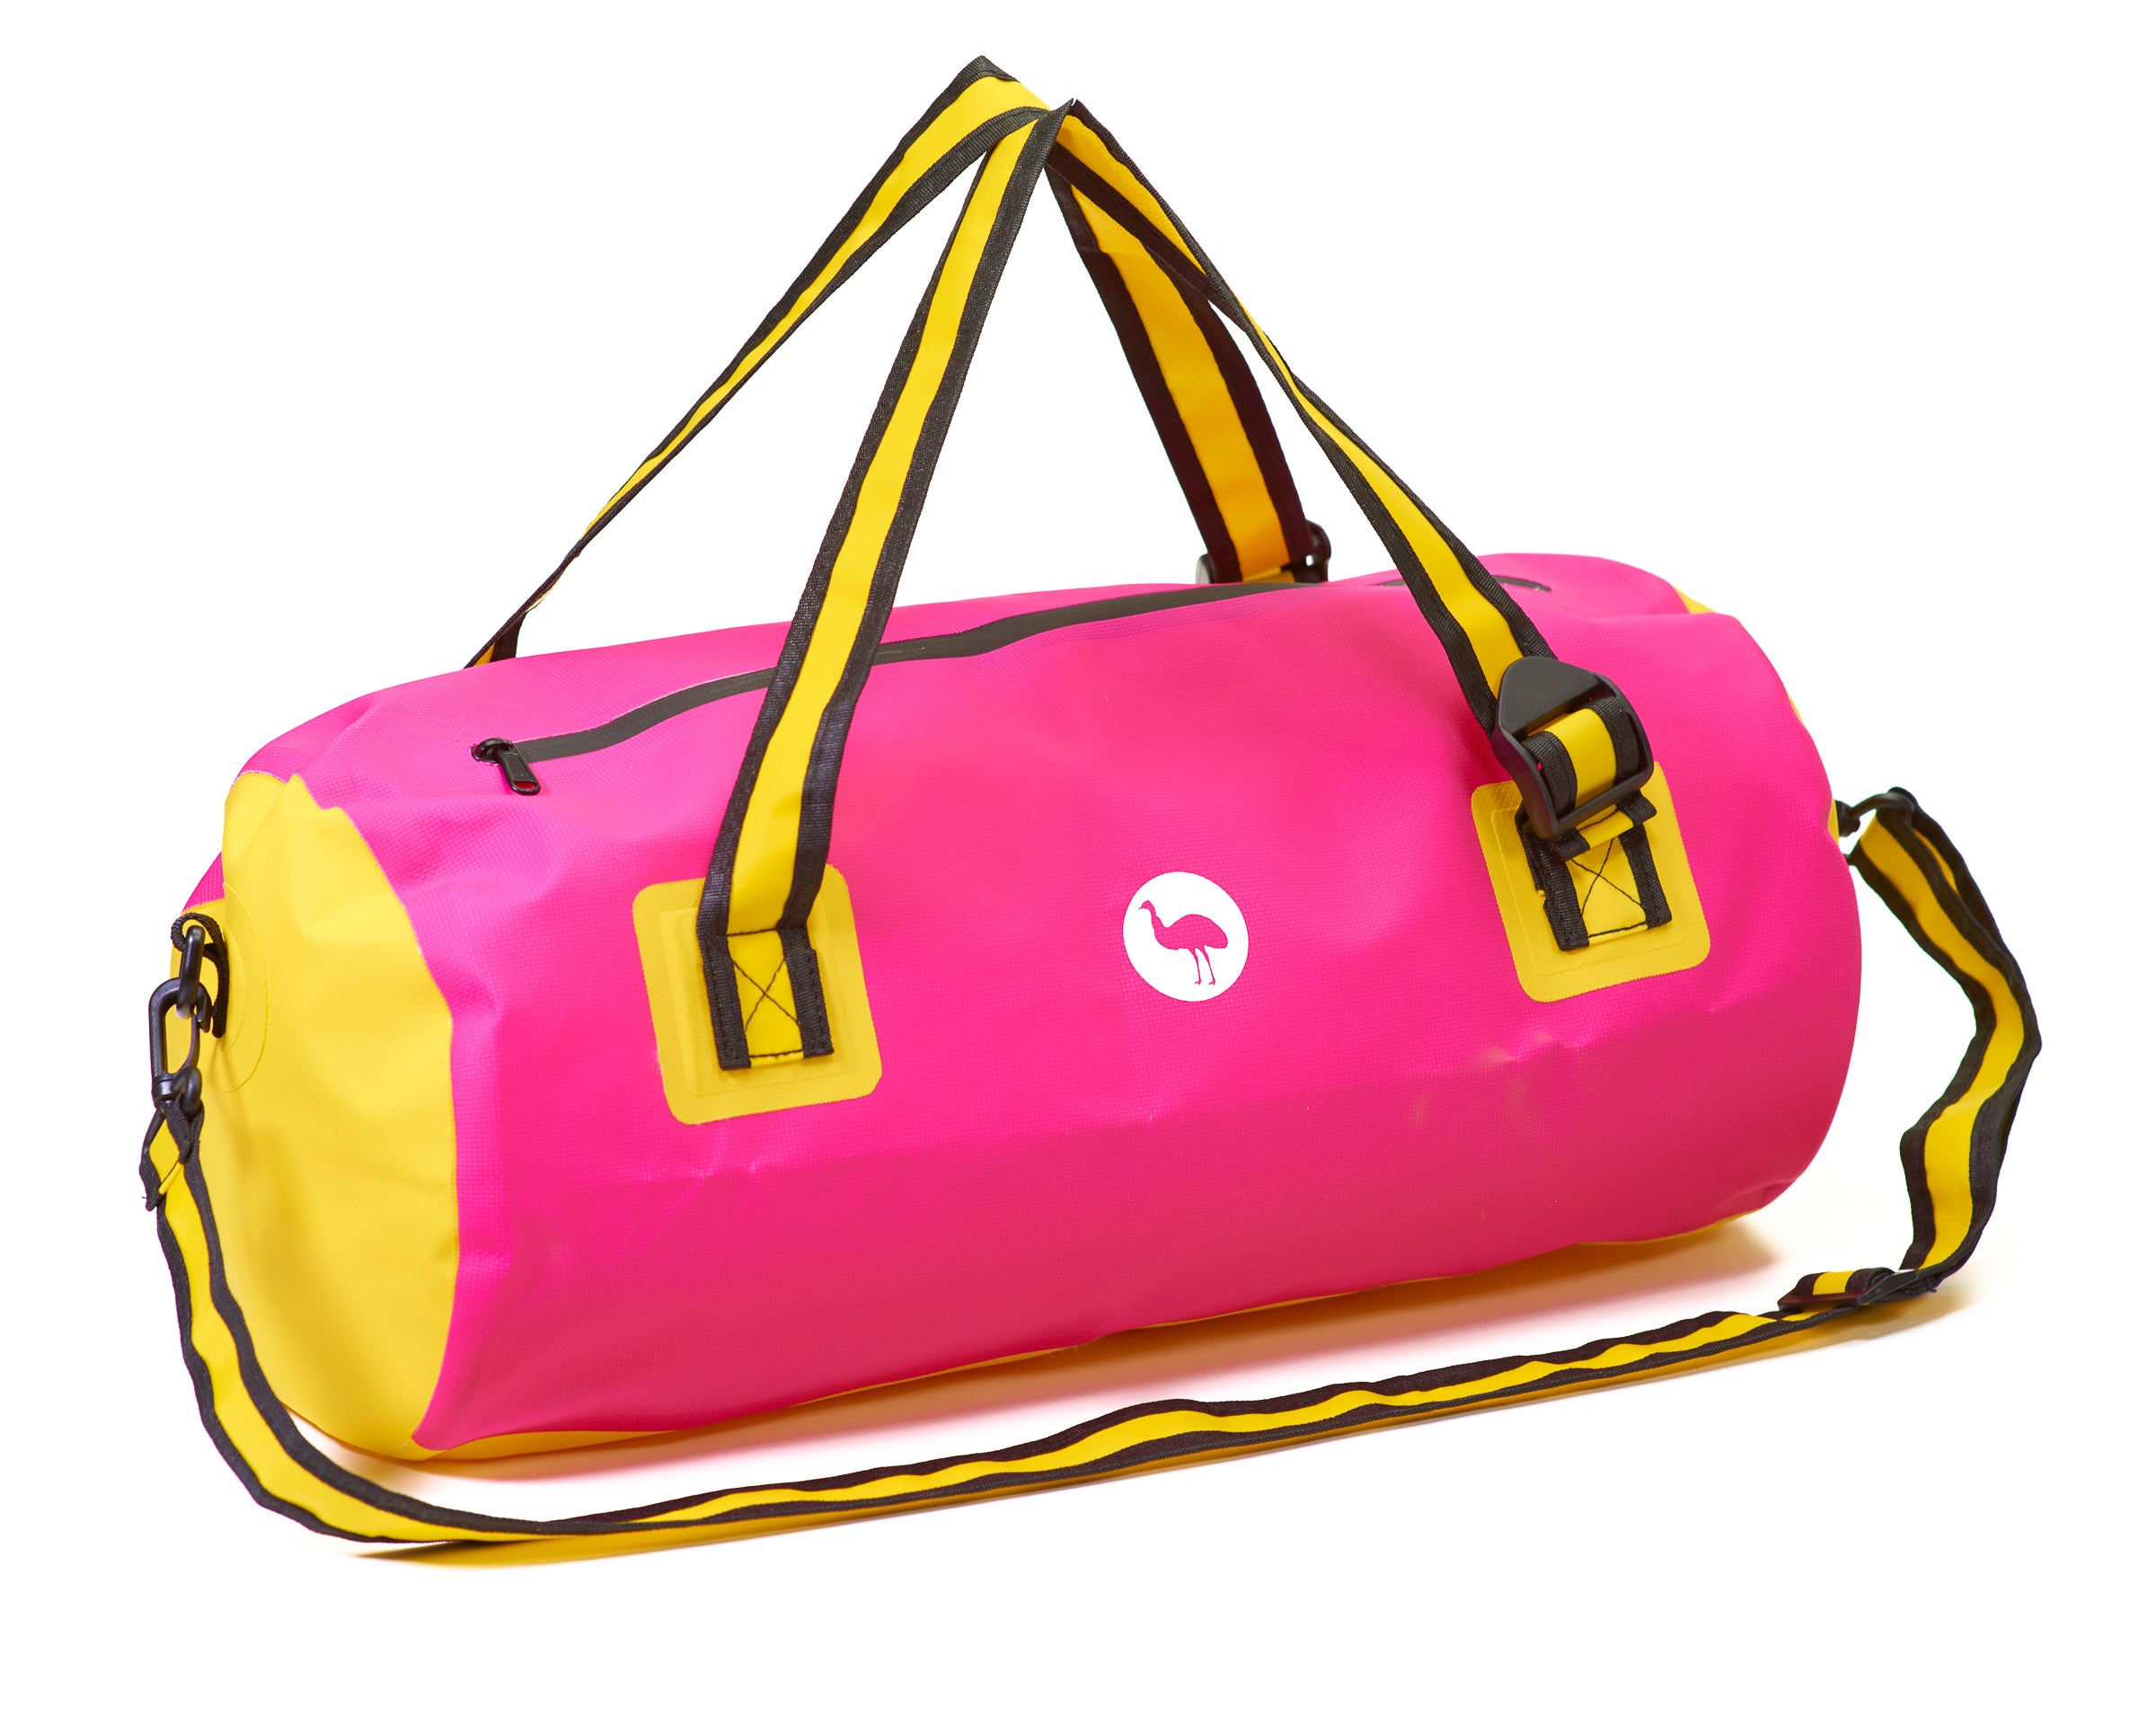 40L Dry Bag Duffel - Khaki/Pink